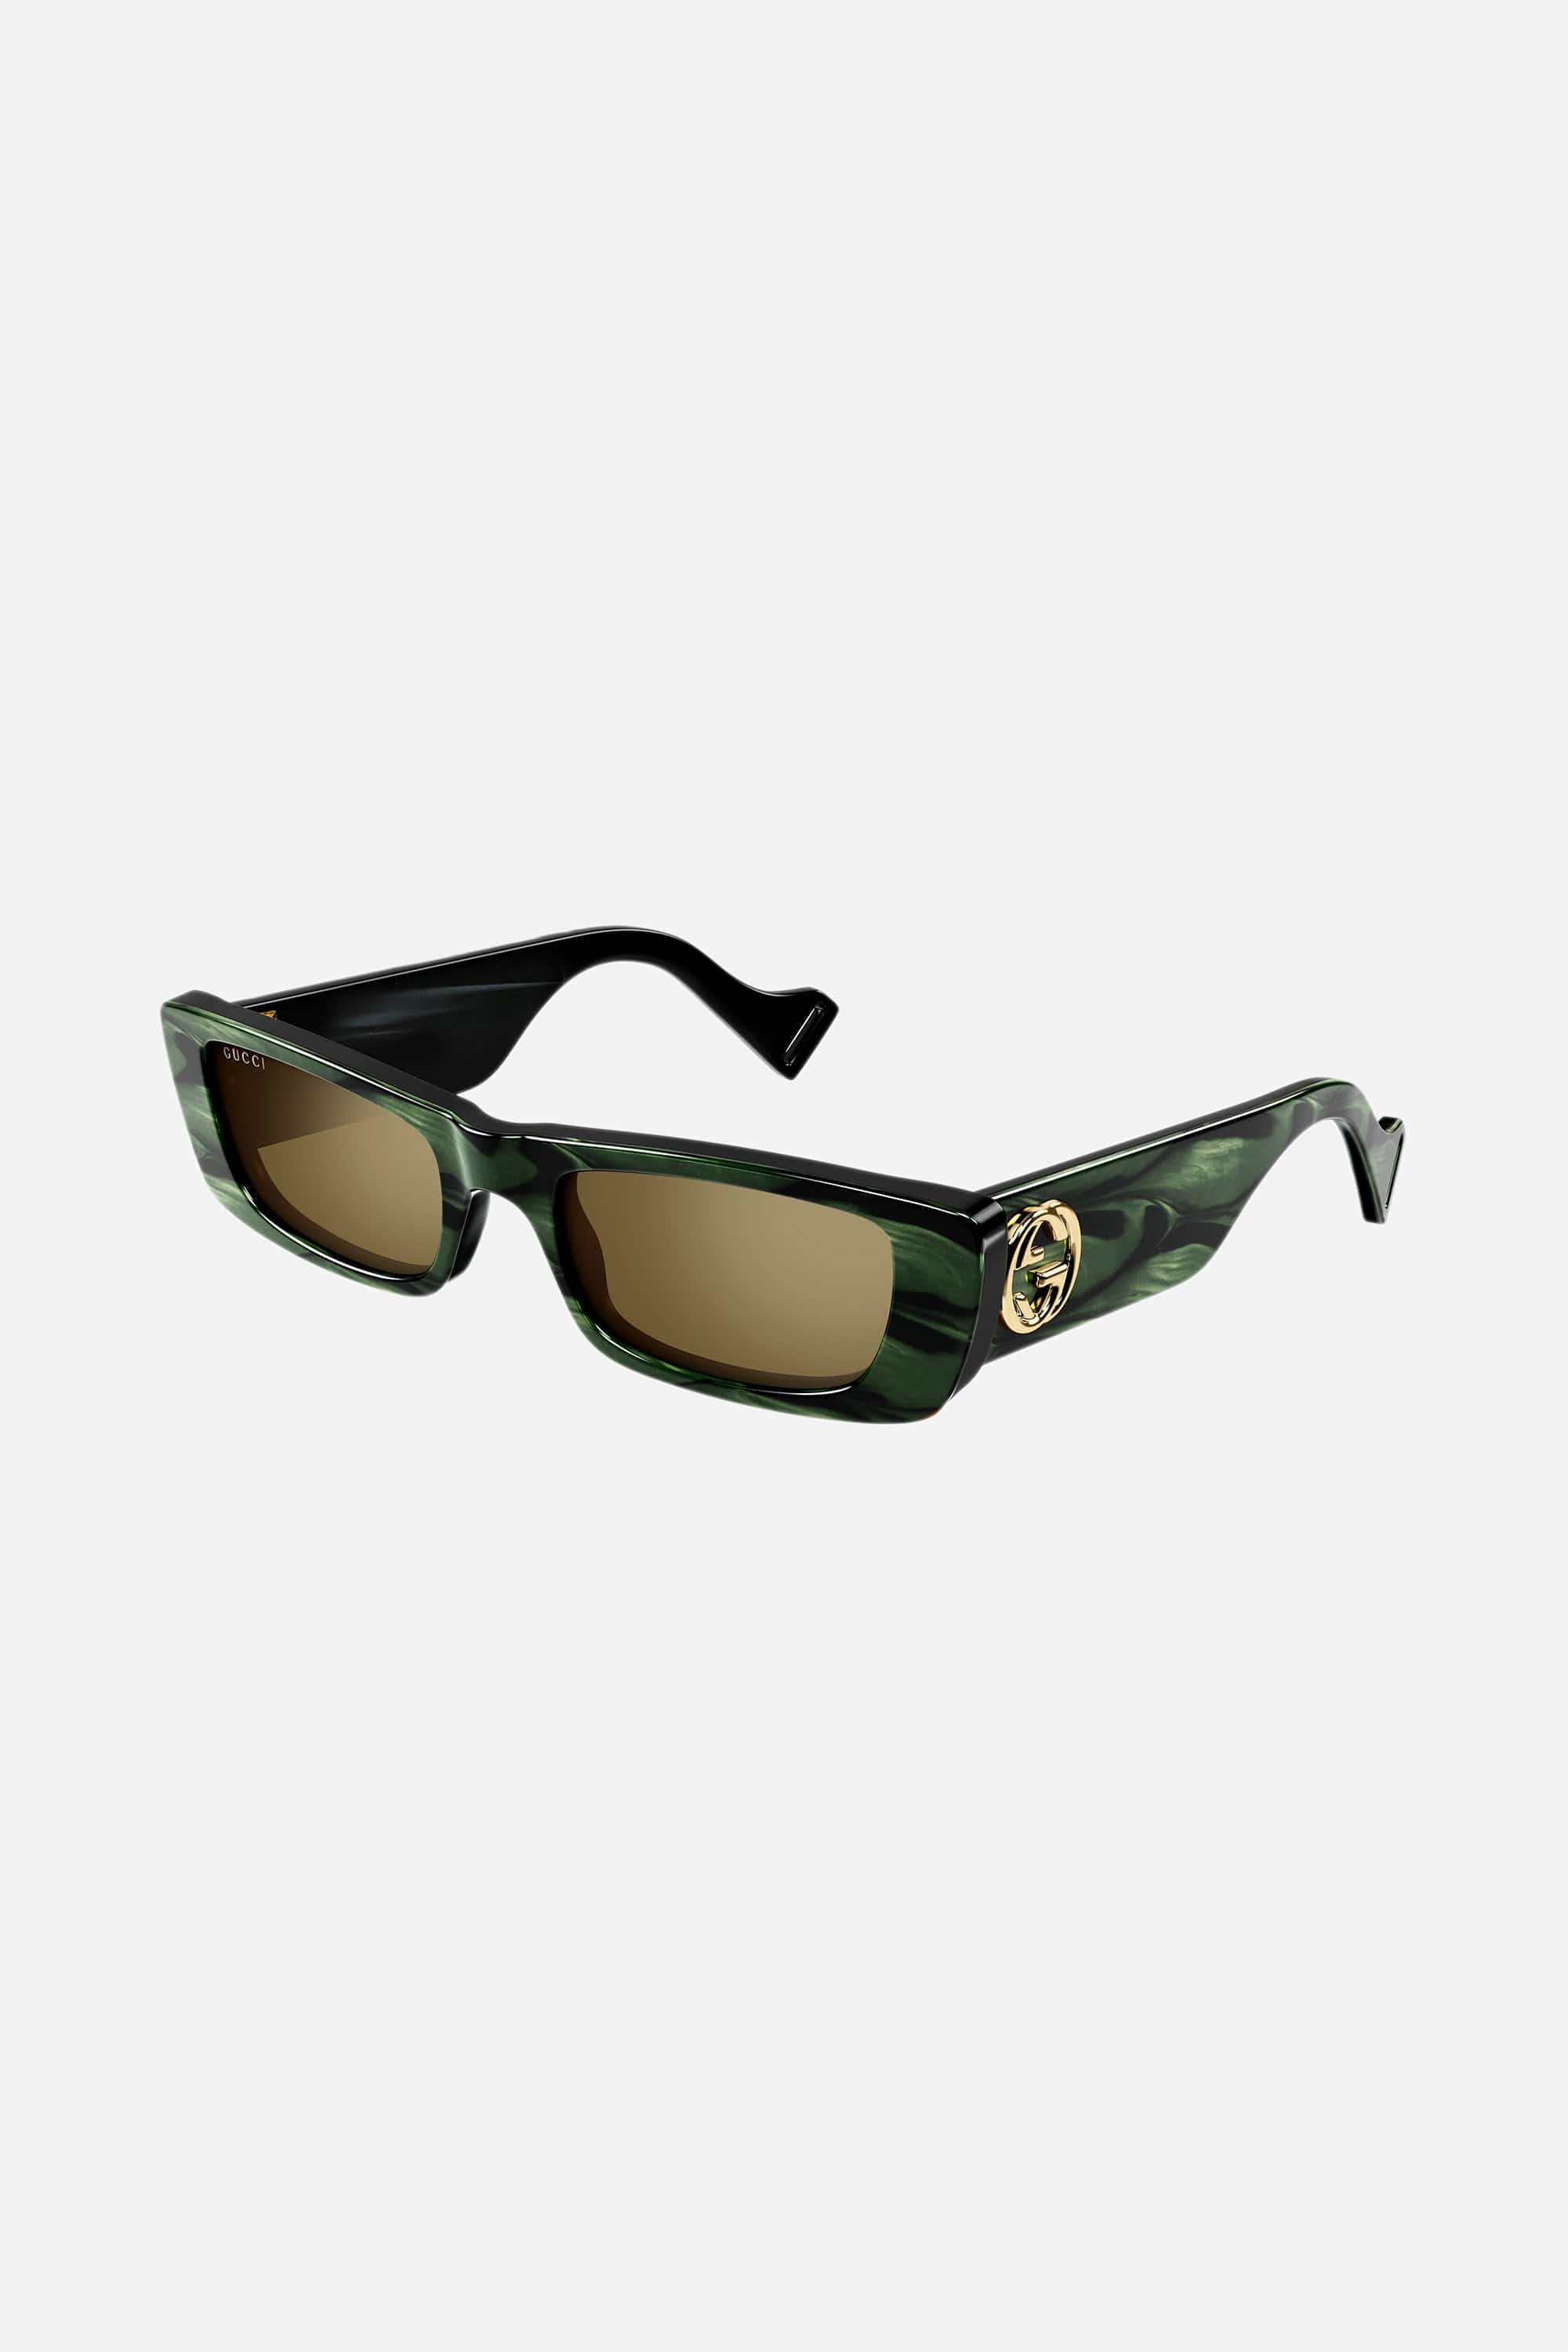 Gucci green rectangular sunglasses - Eyewear Club